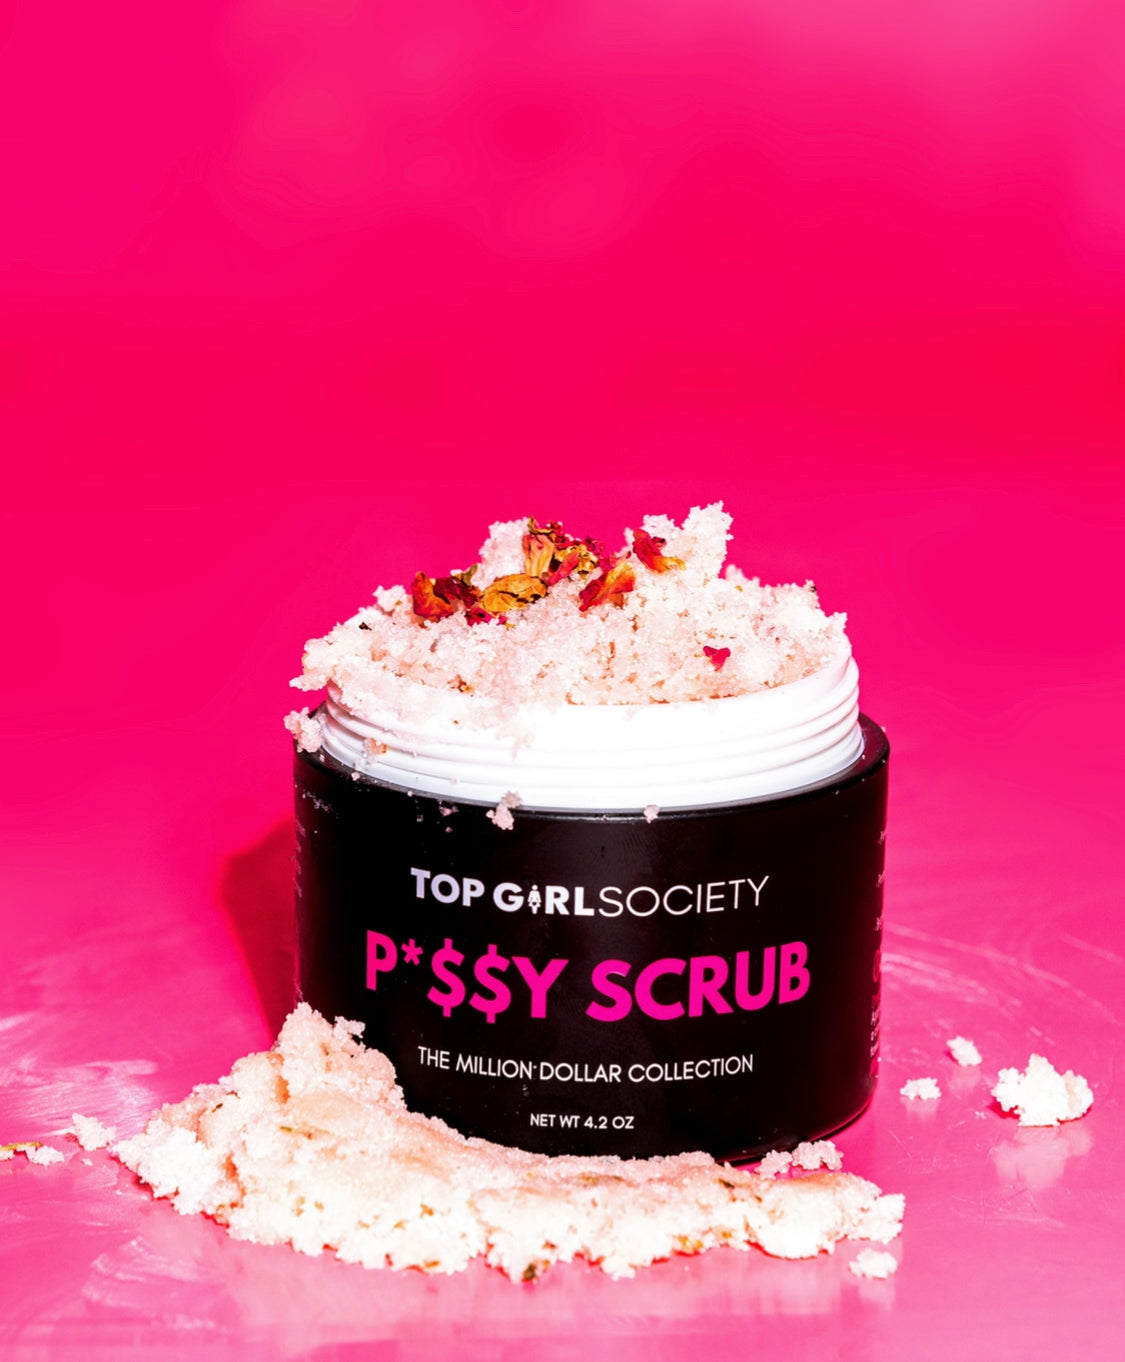 Top Girl Society – TOP GIRL SOCIETY